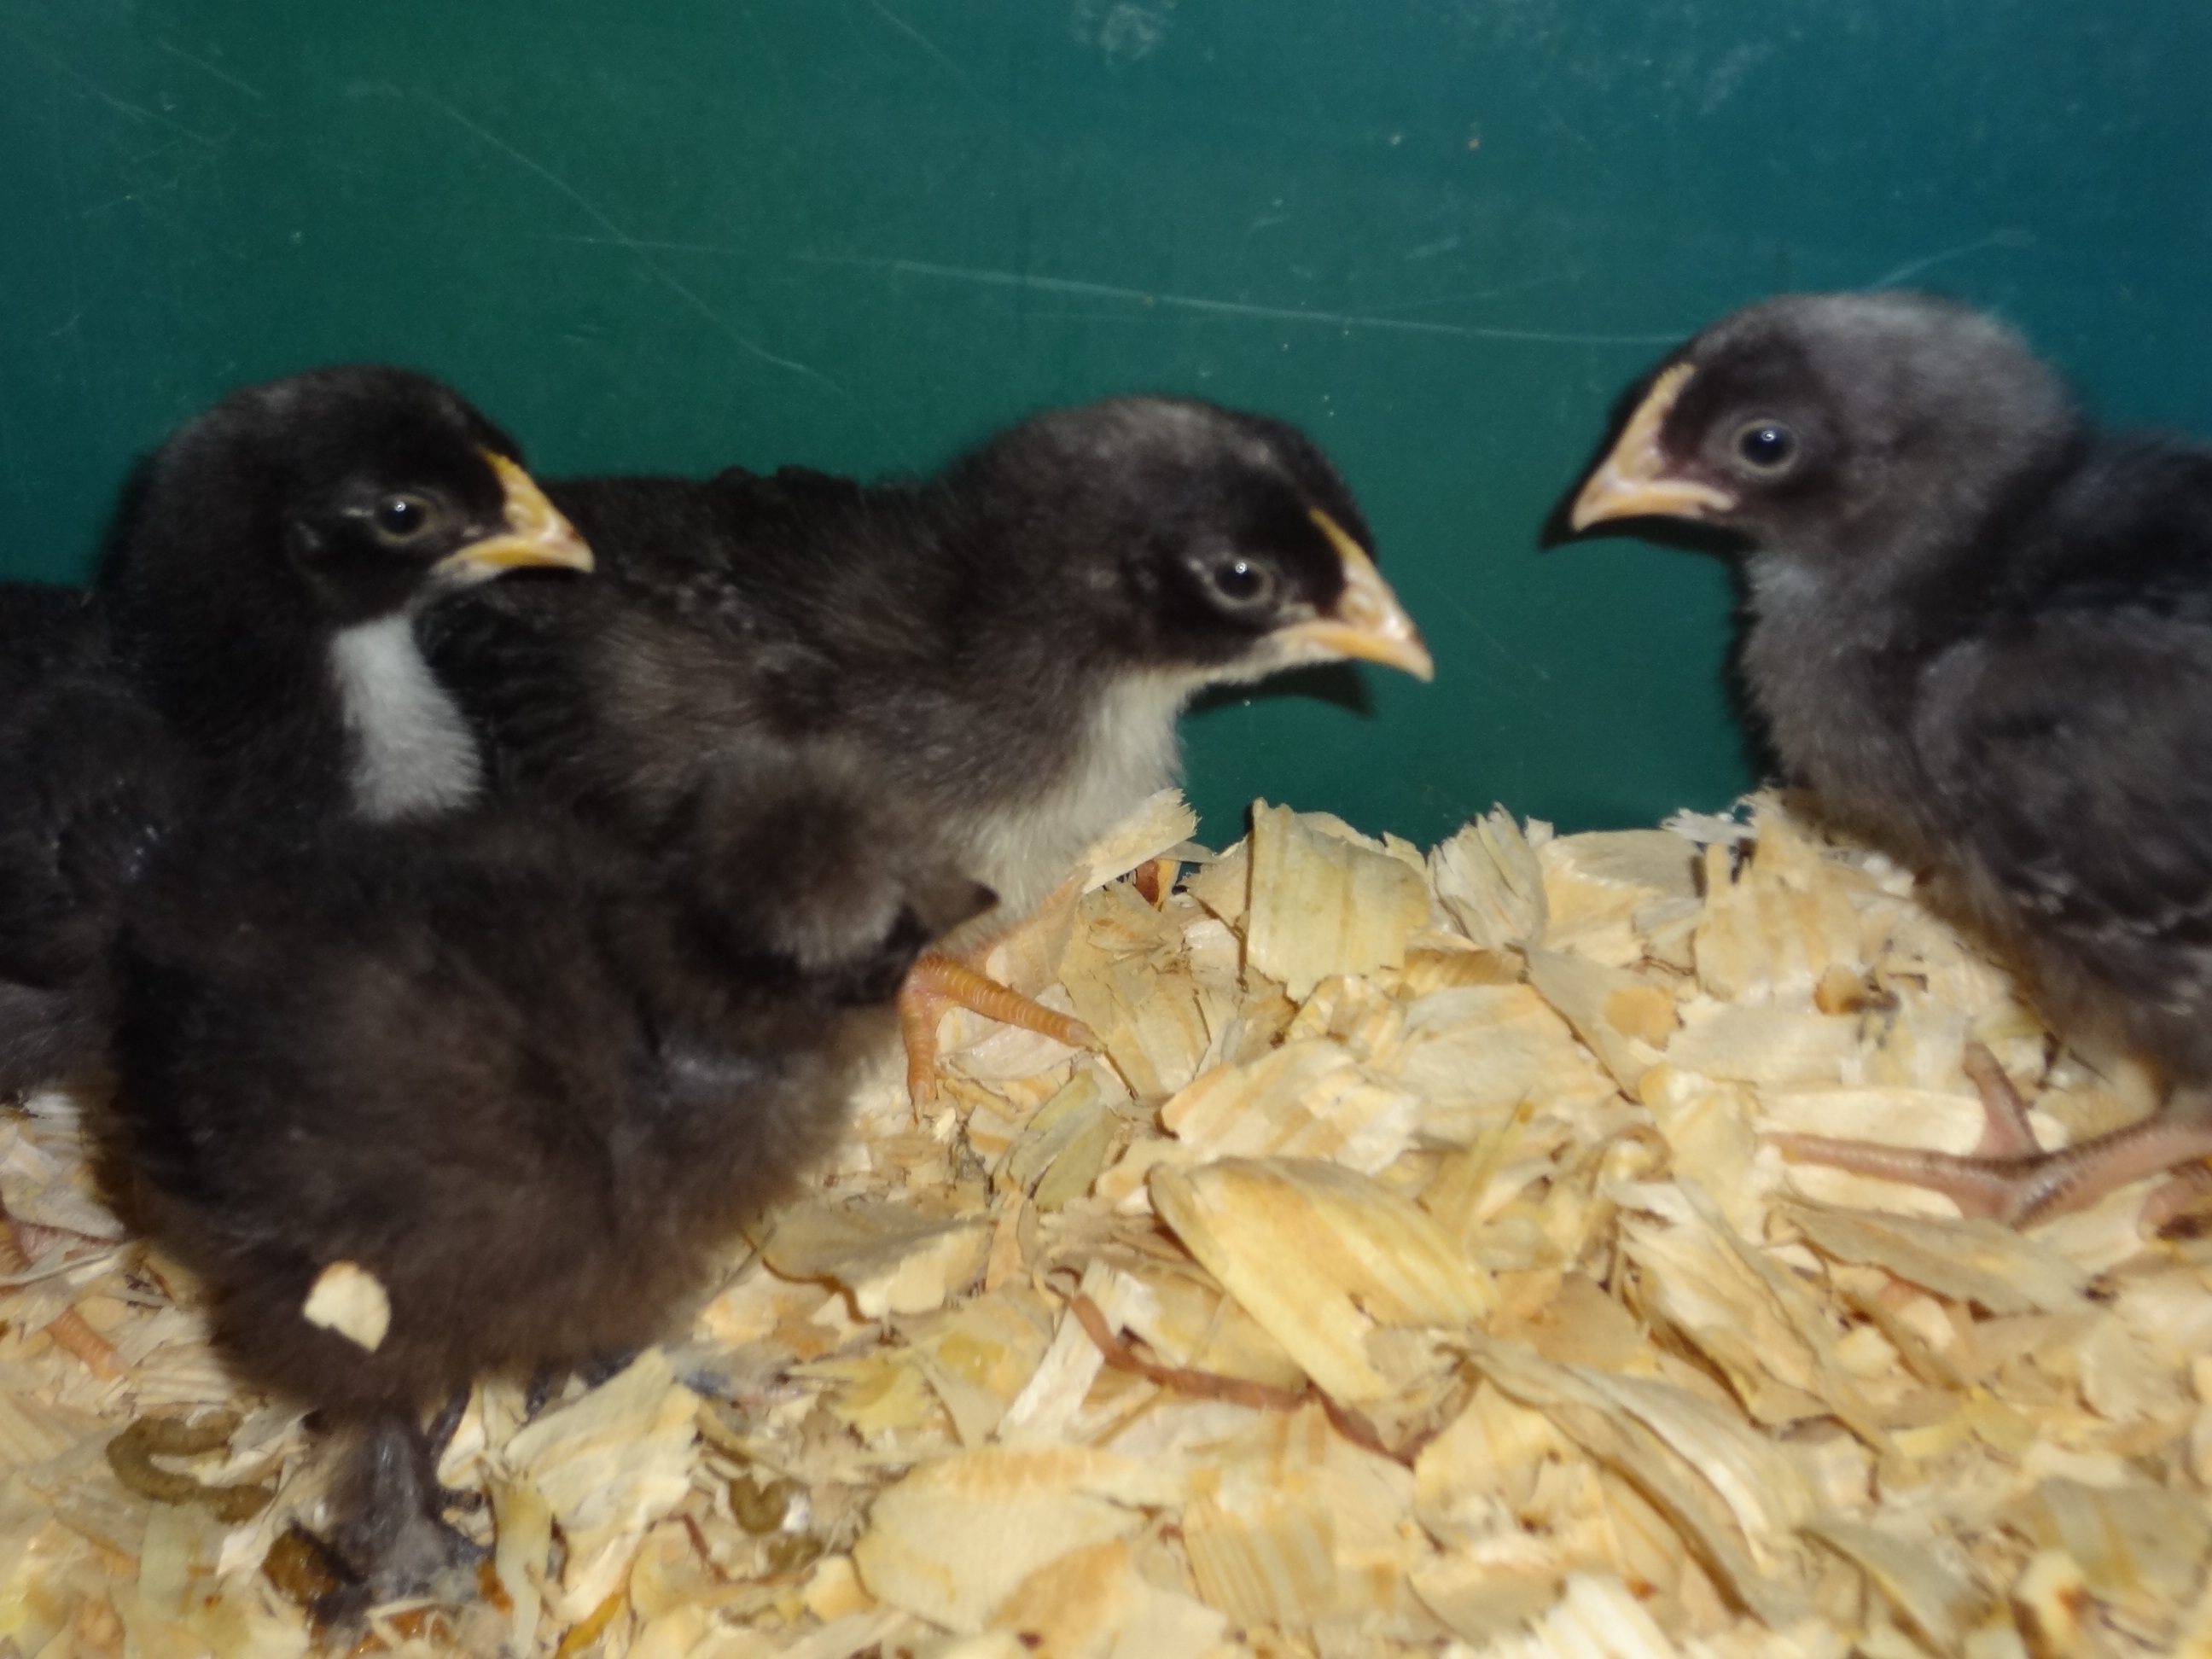 new chicks--pic taken 03-27-2012 (born 03-10-2012)
3 OliveEggers (Marin x Cream legbar)